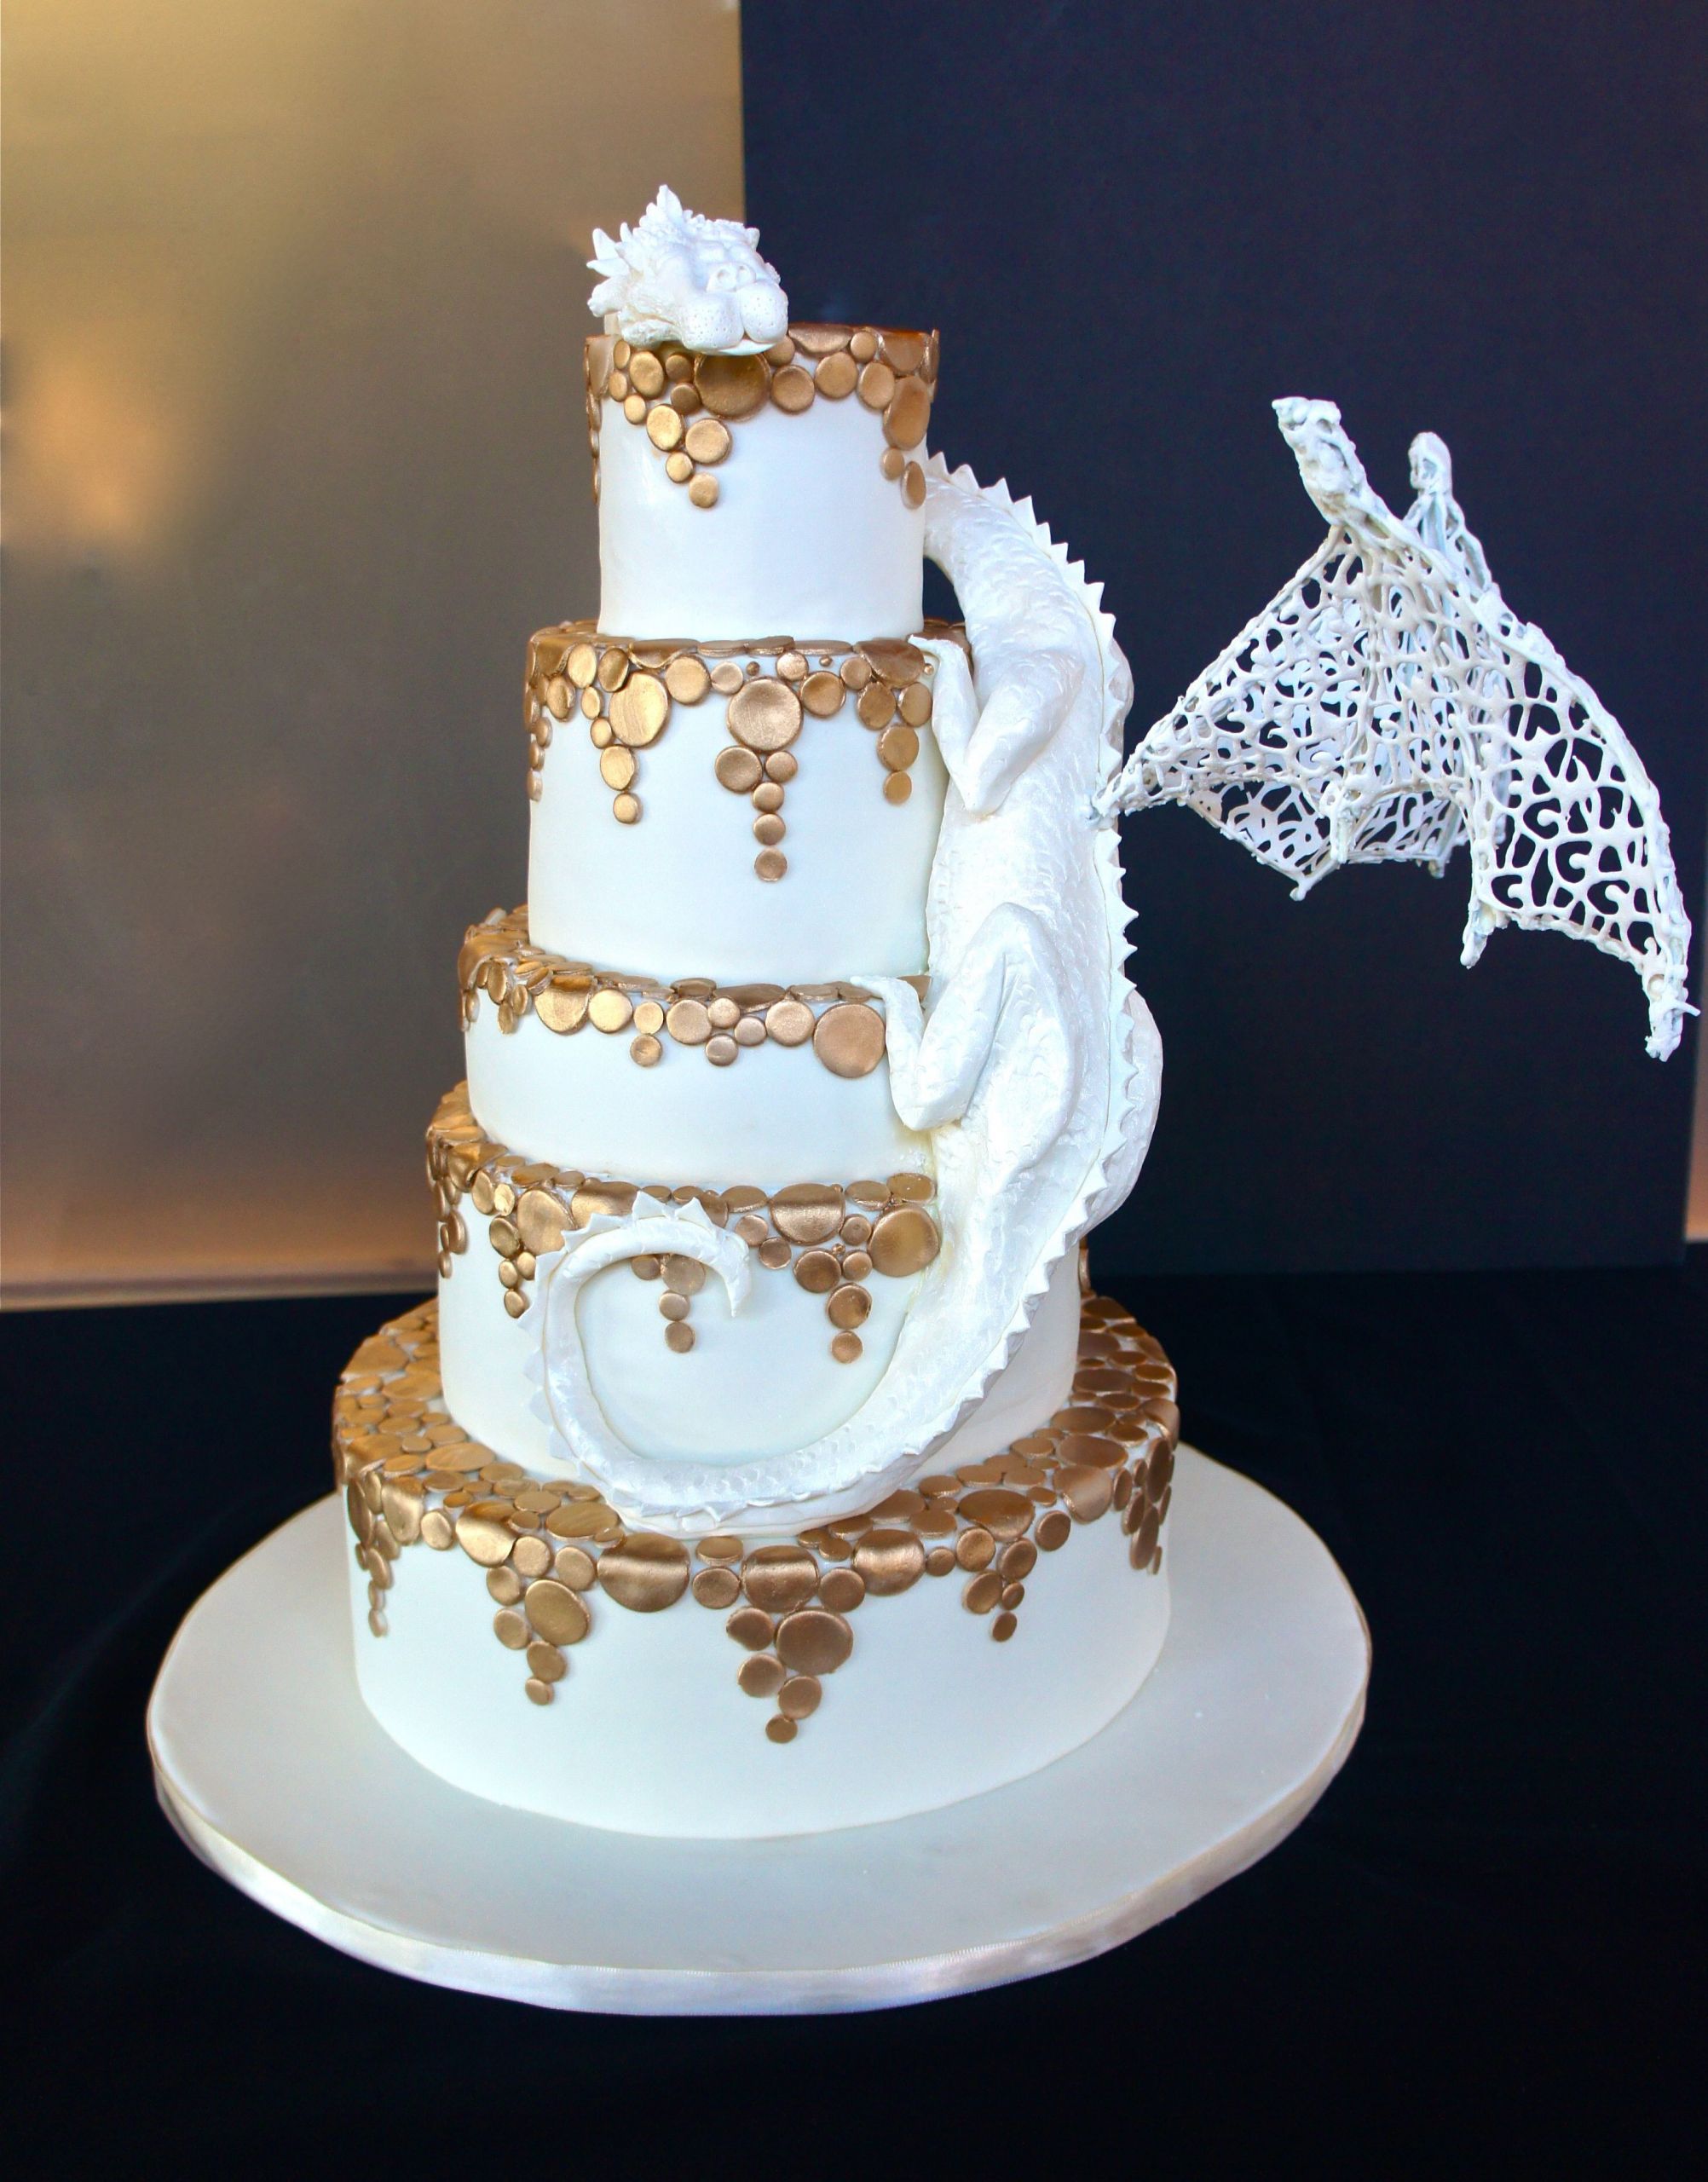 Dragon Wedding Cakes
 White chocolate dragon wedding cake with gold falling